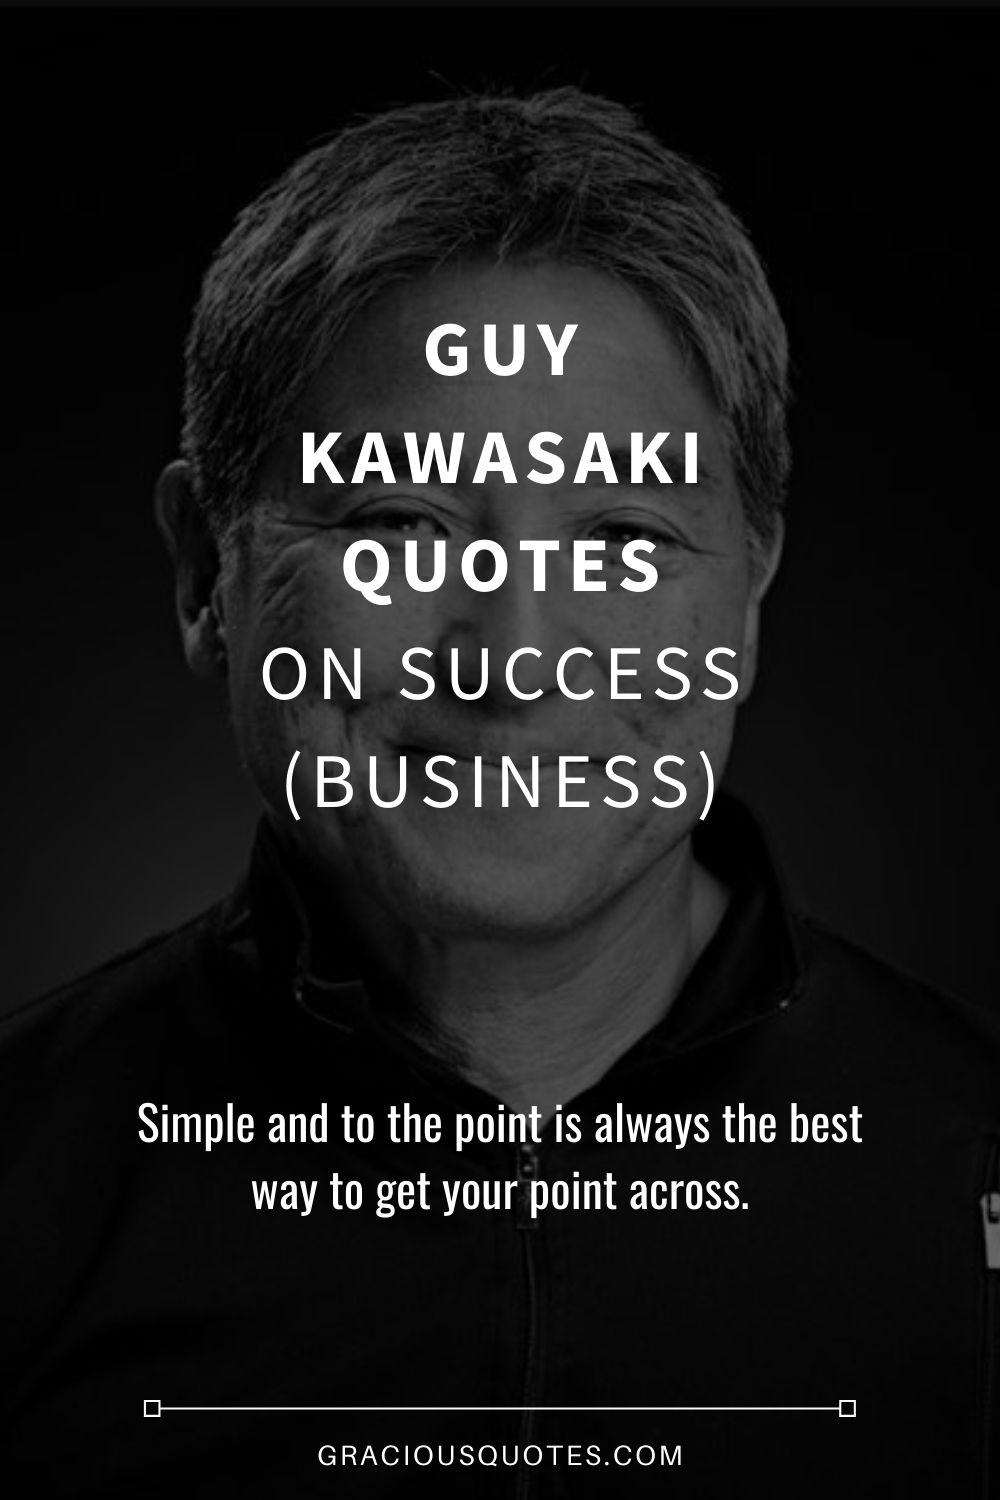 Guy Kawasaki Quotes on Success (BUSINESS) - Gracious Quotes